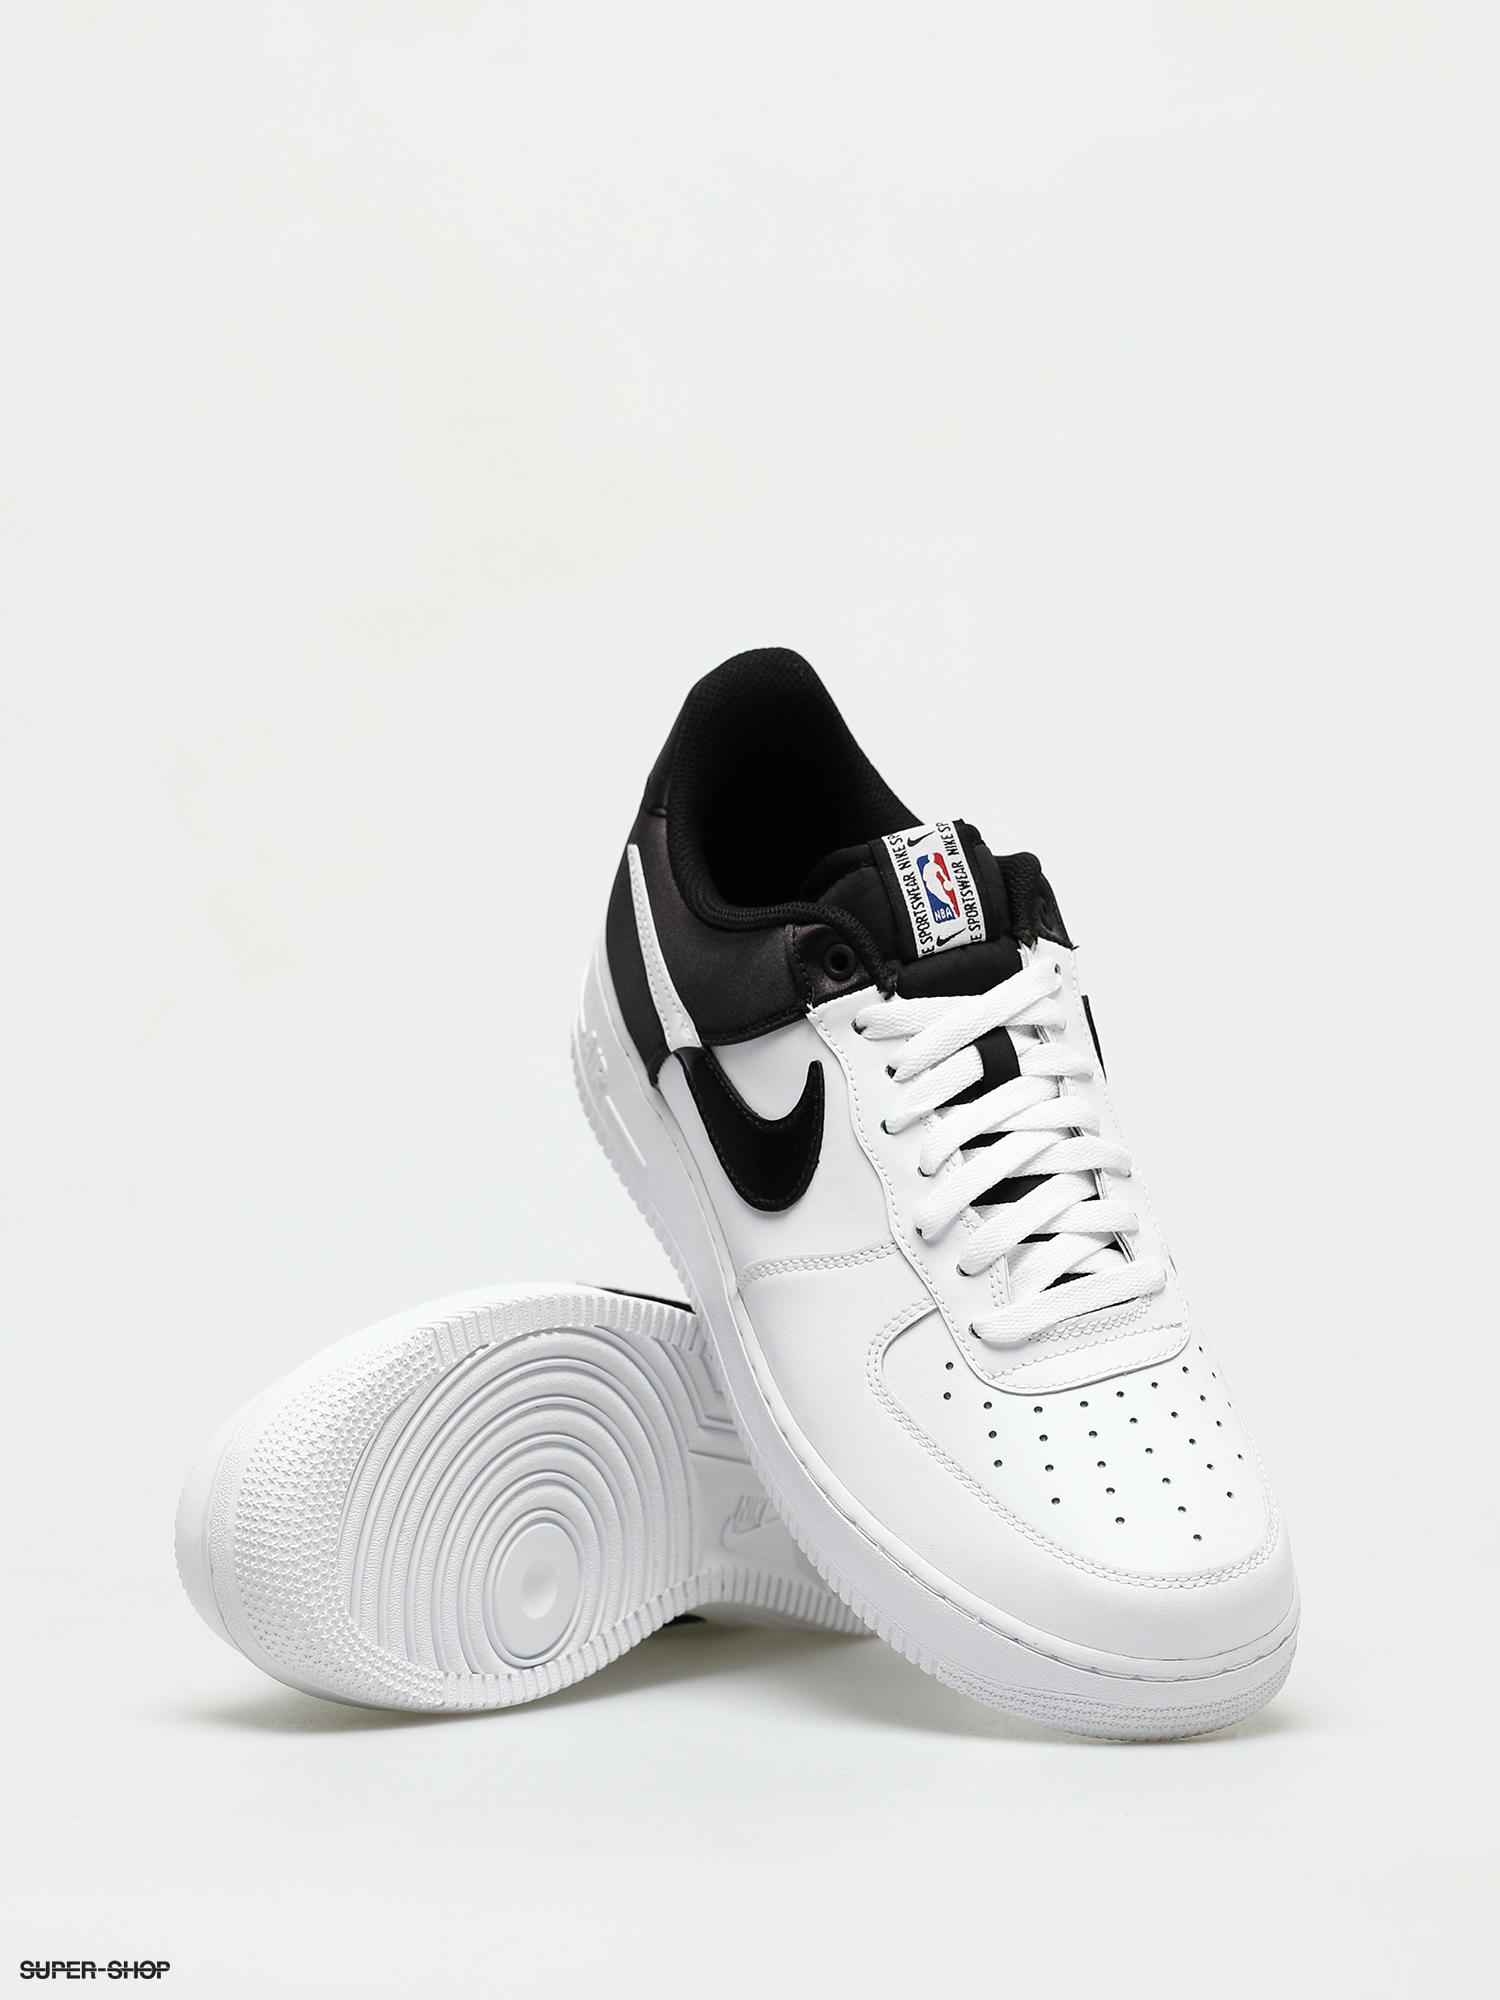 Nike Air Force 1 07 LV8 Wave Sail White/Black Walking Shoes DM0117